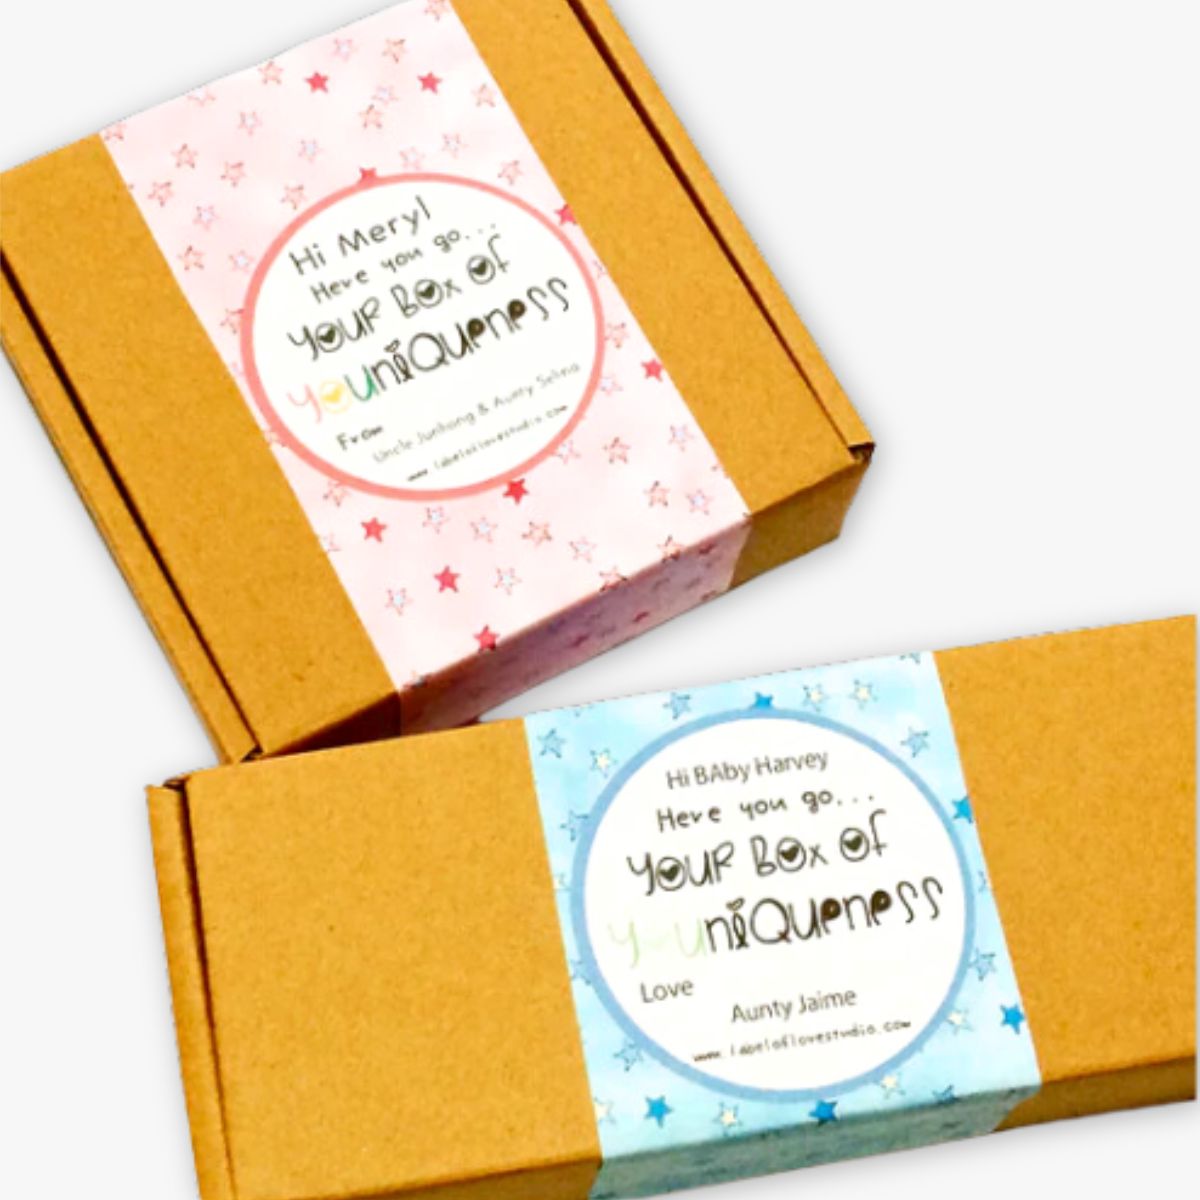 Label of Love Studio Gift Hamper Packaging